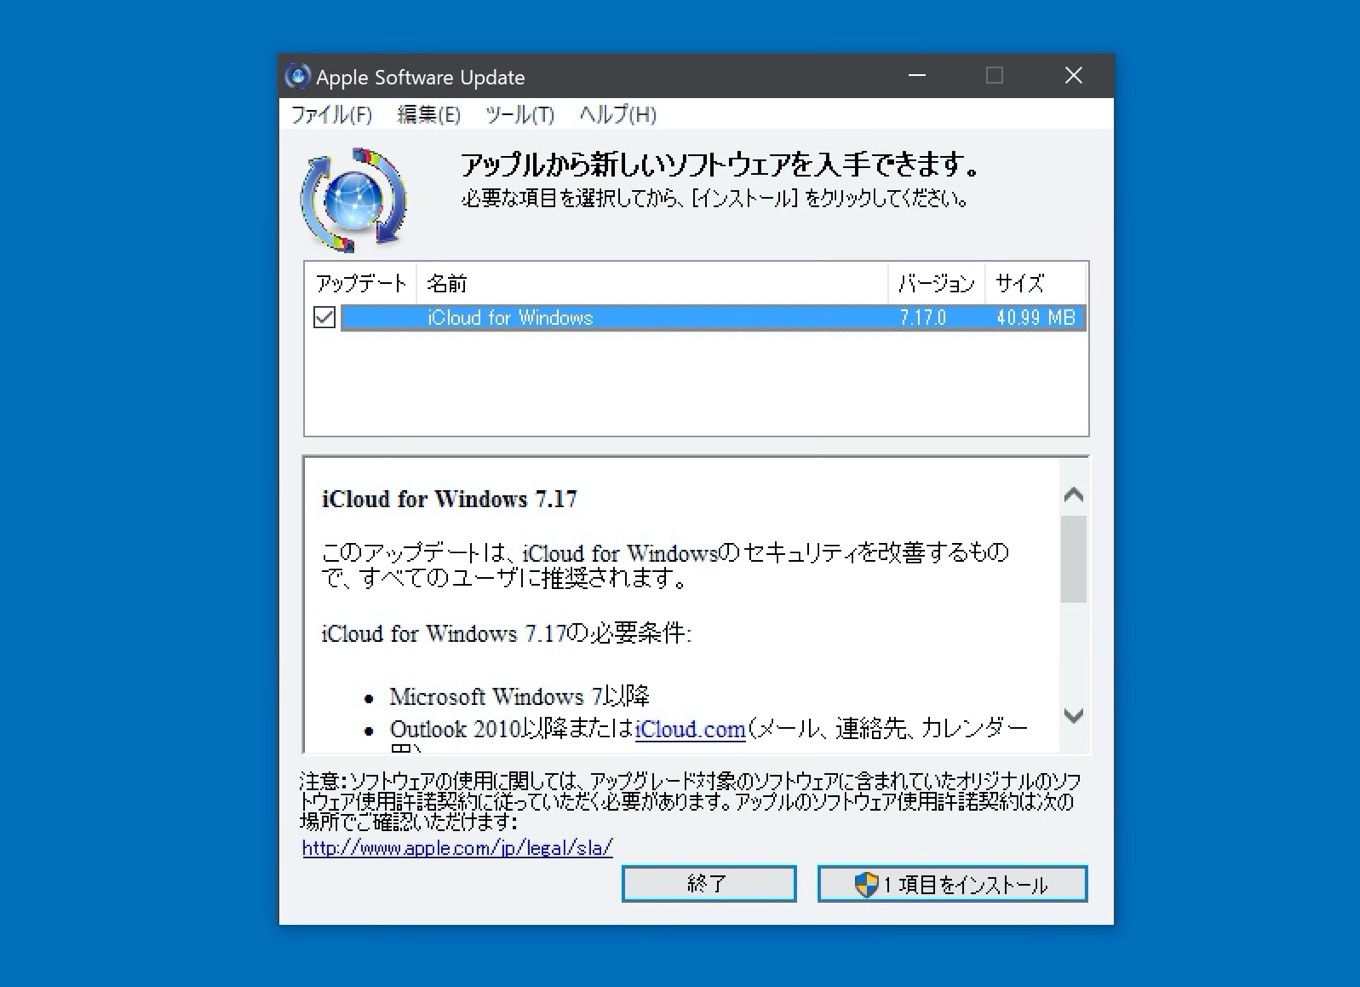 iCloud for Windows 7.17